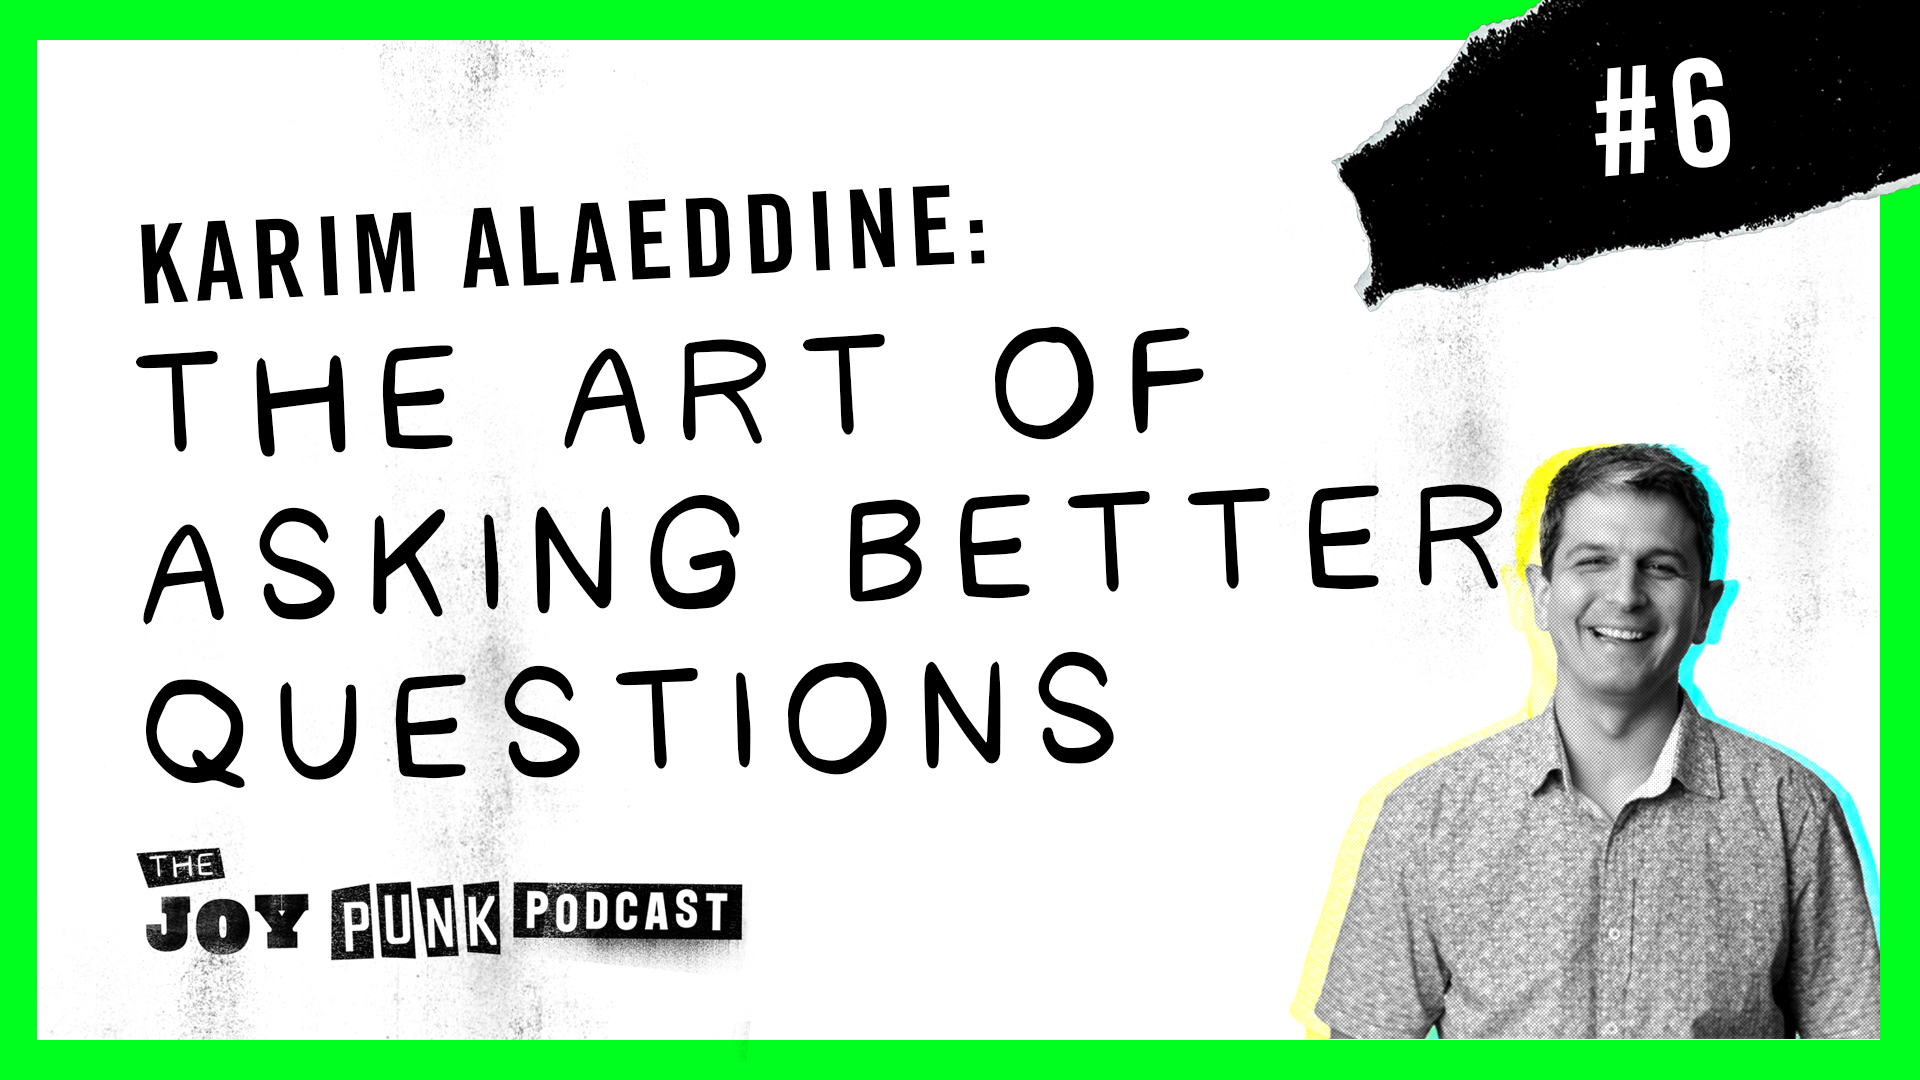 #6 Karim Alaeddine: The Art of Asking Better Questions